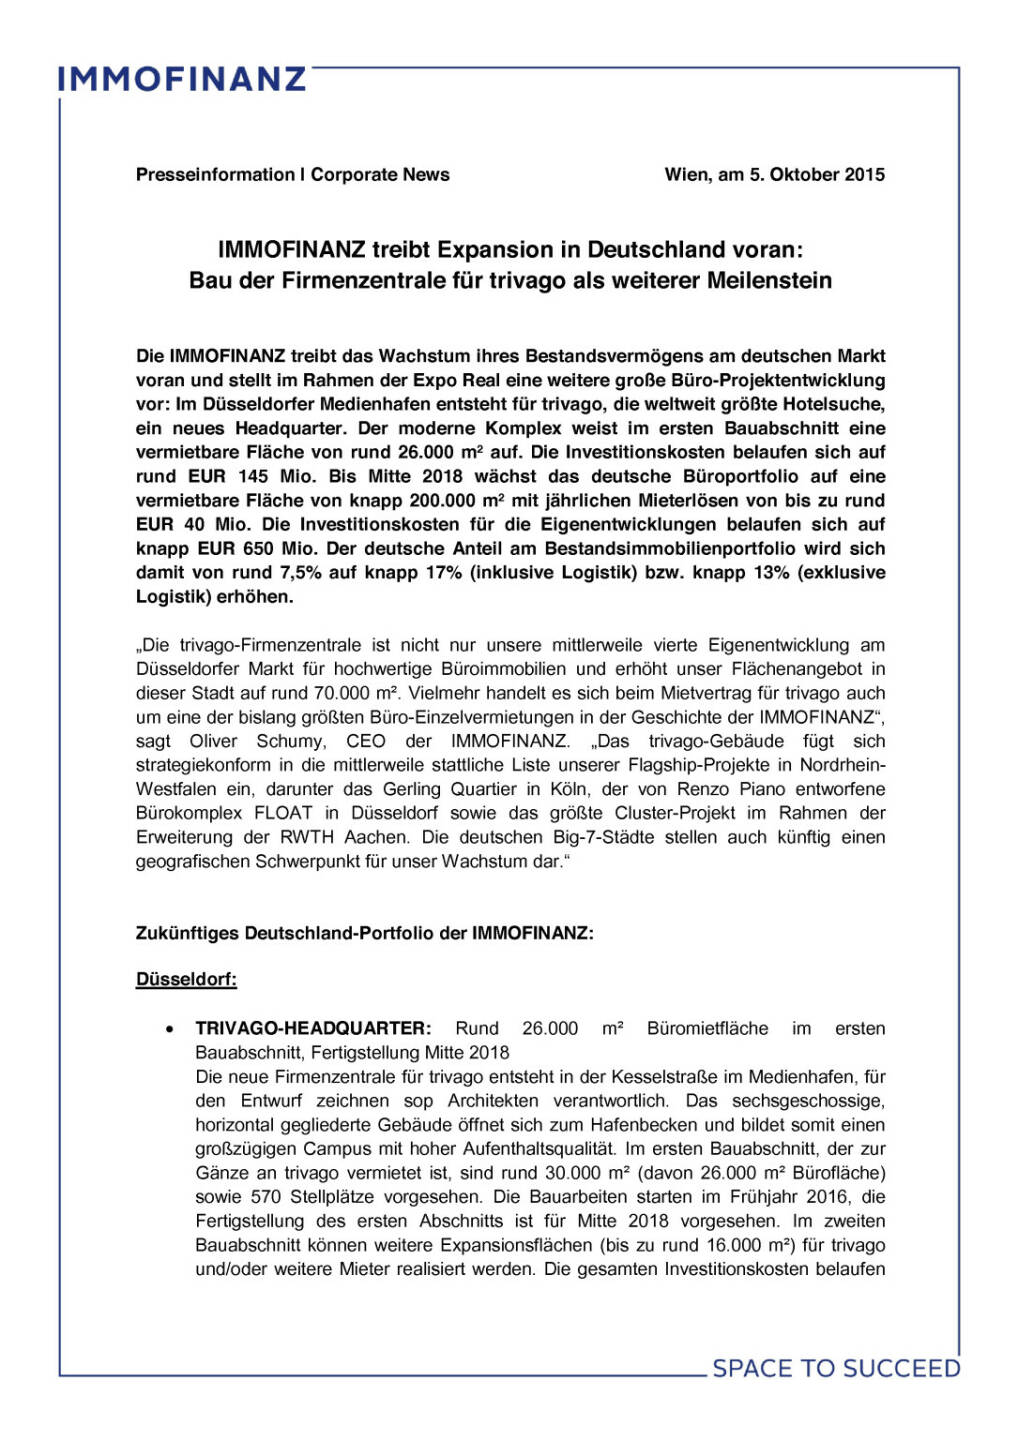 Immofinanz baut trivago Firmenzentrale, Seite 1/3, komplettes Dokument unter http://boerse-social.com/static/uploads/file_395_immofinanz_baut_trivago_firmenzentrale.pdf